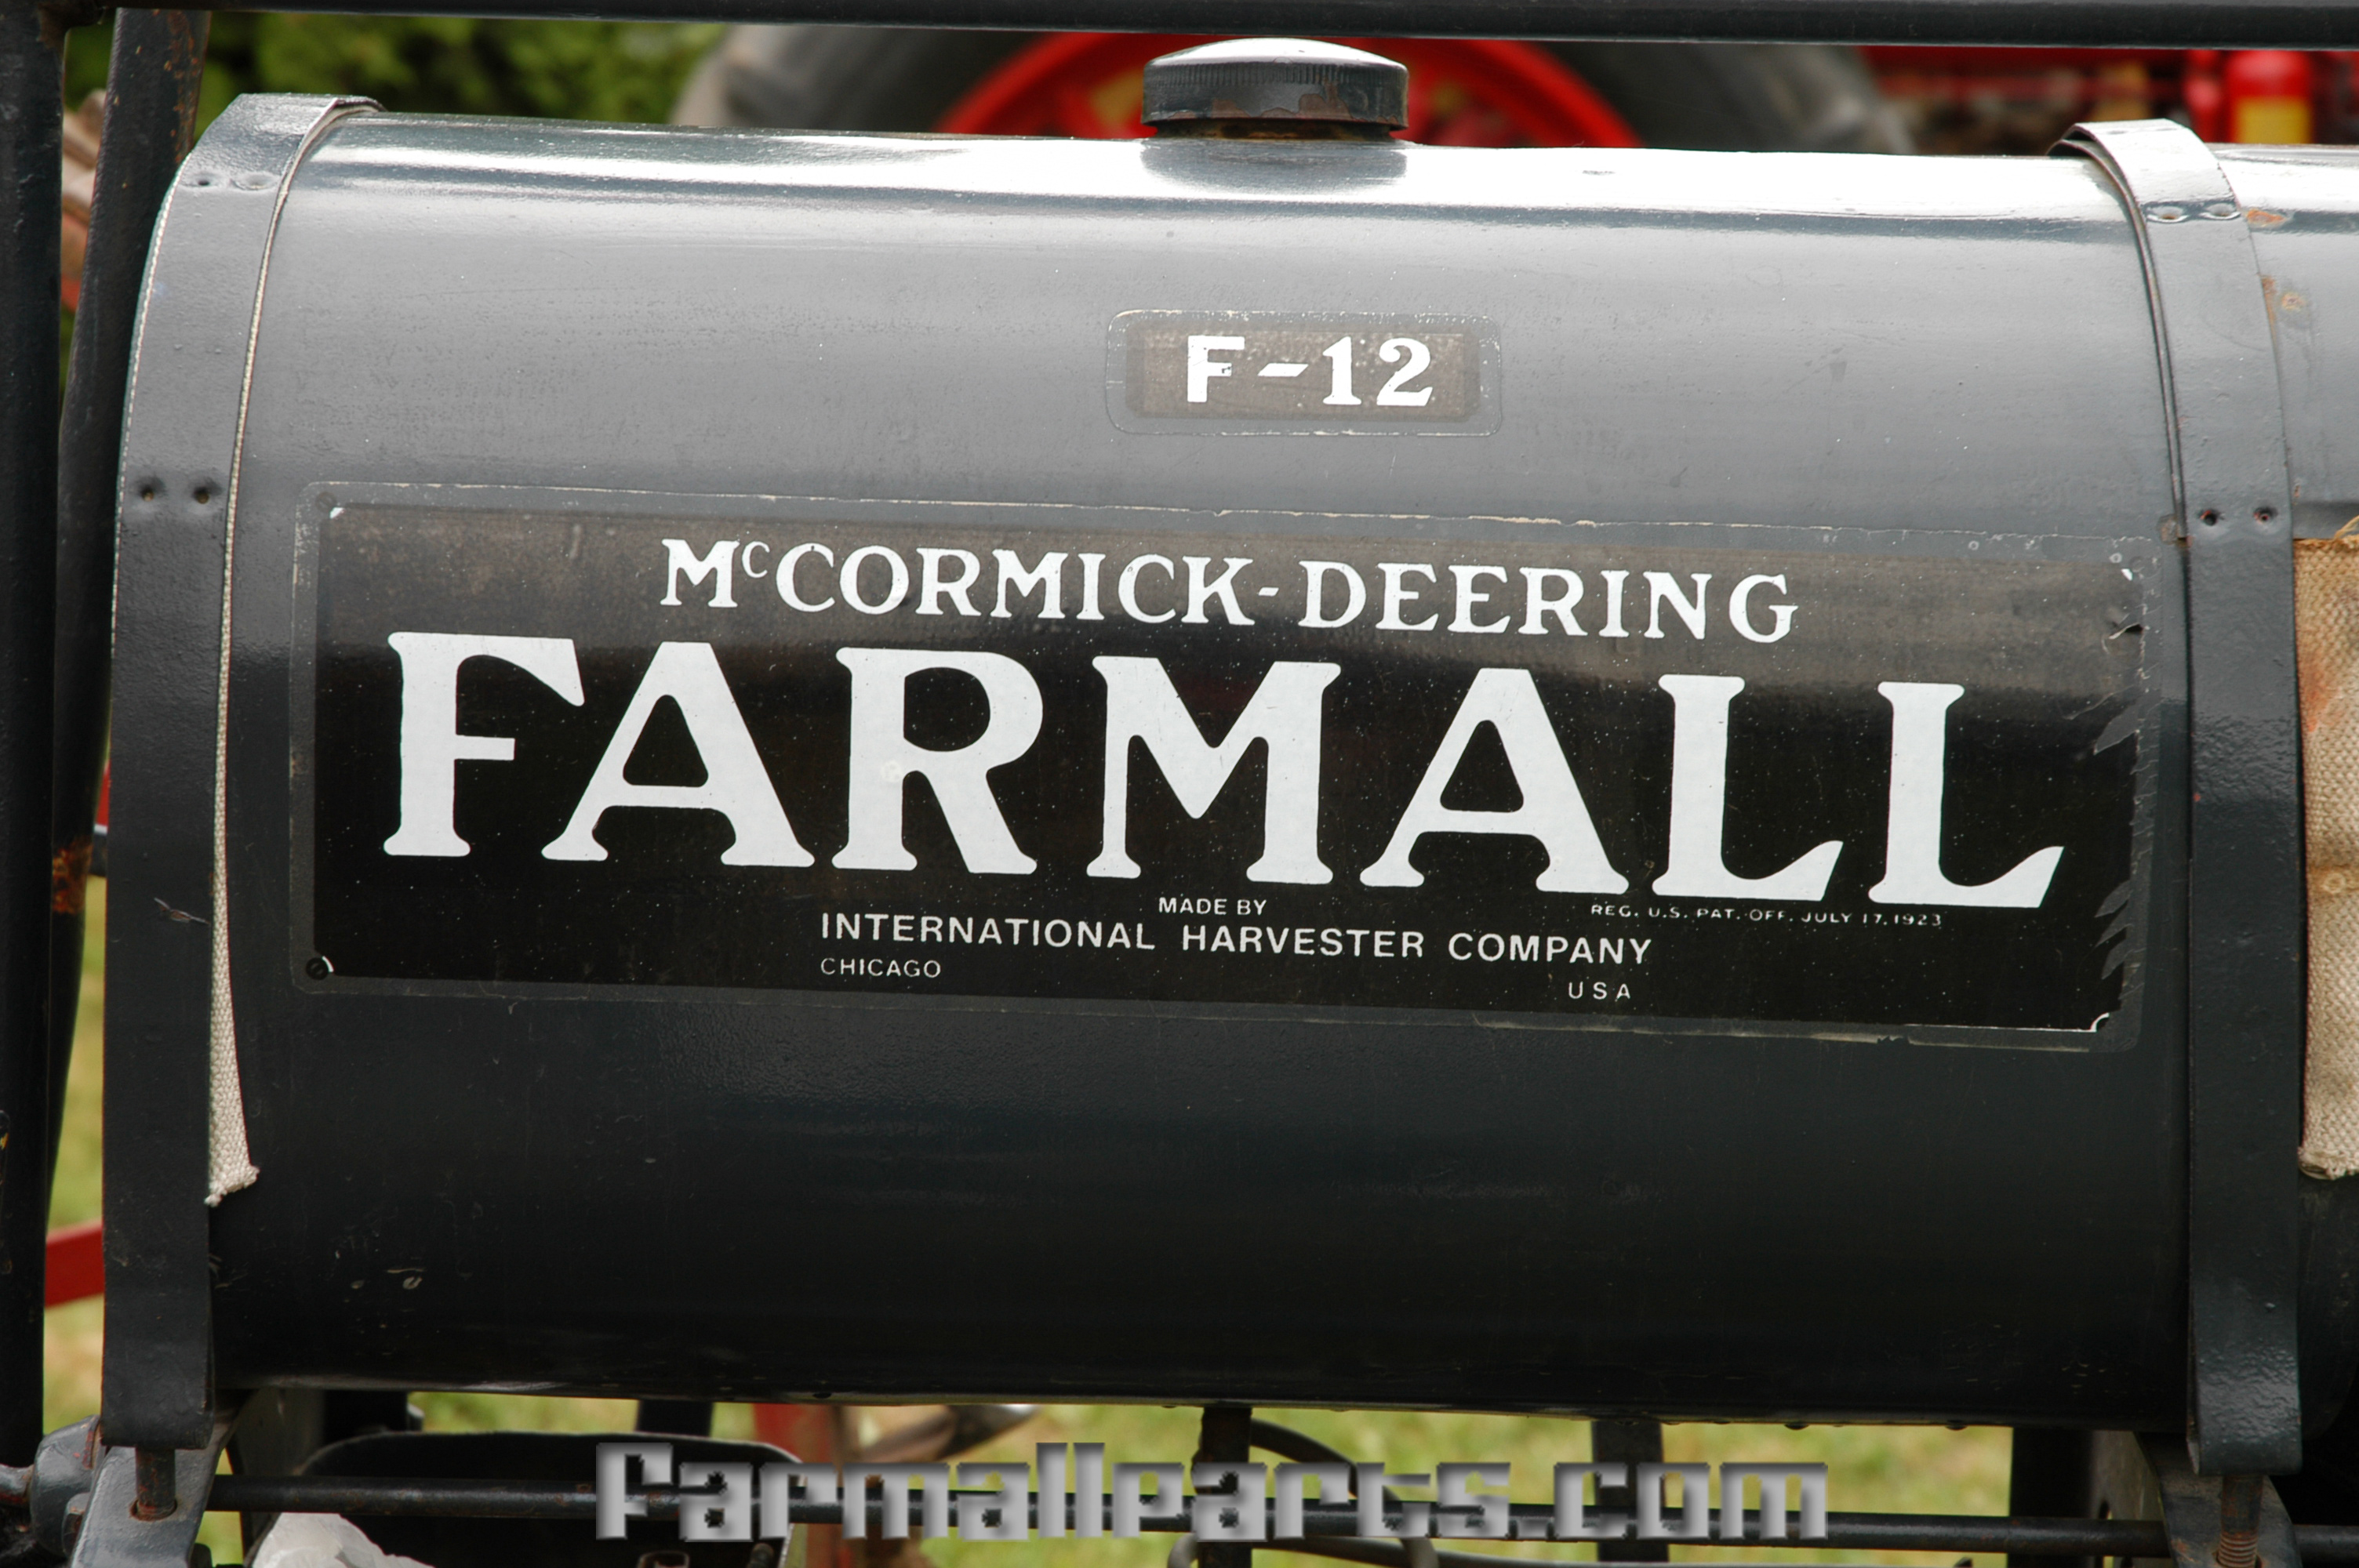 International Harvester Farmall McCormick-Deering F-12 Fuel Tank